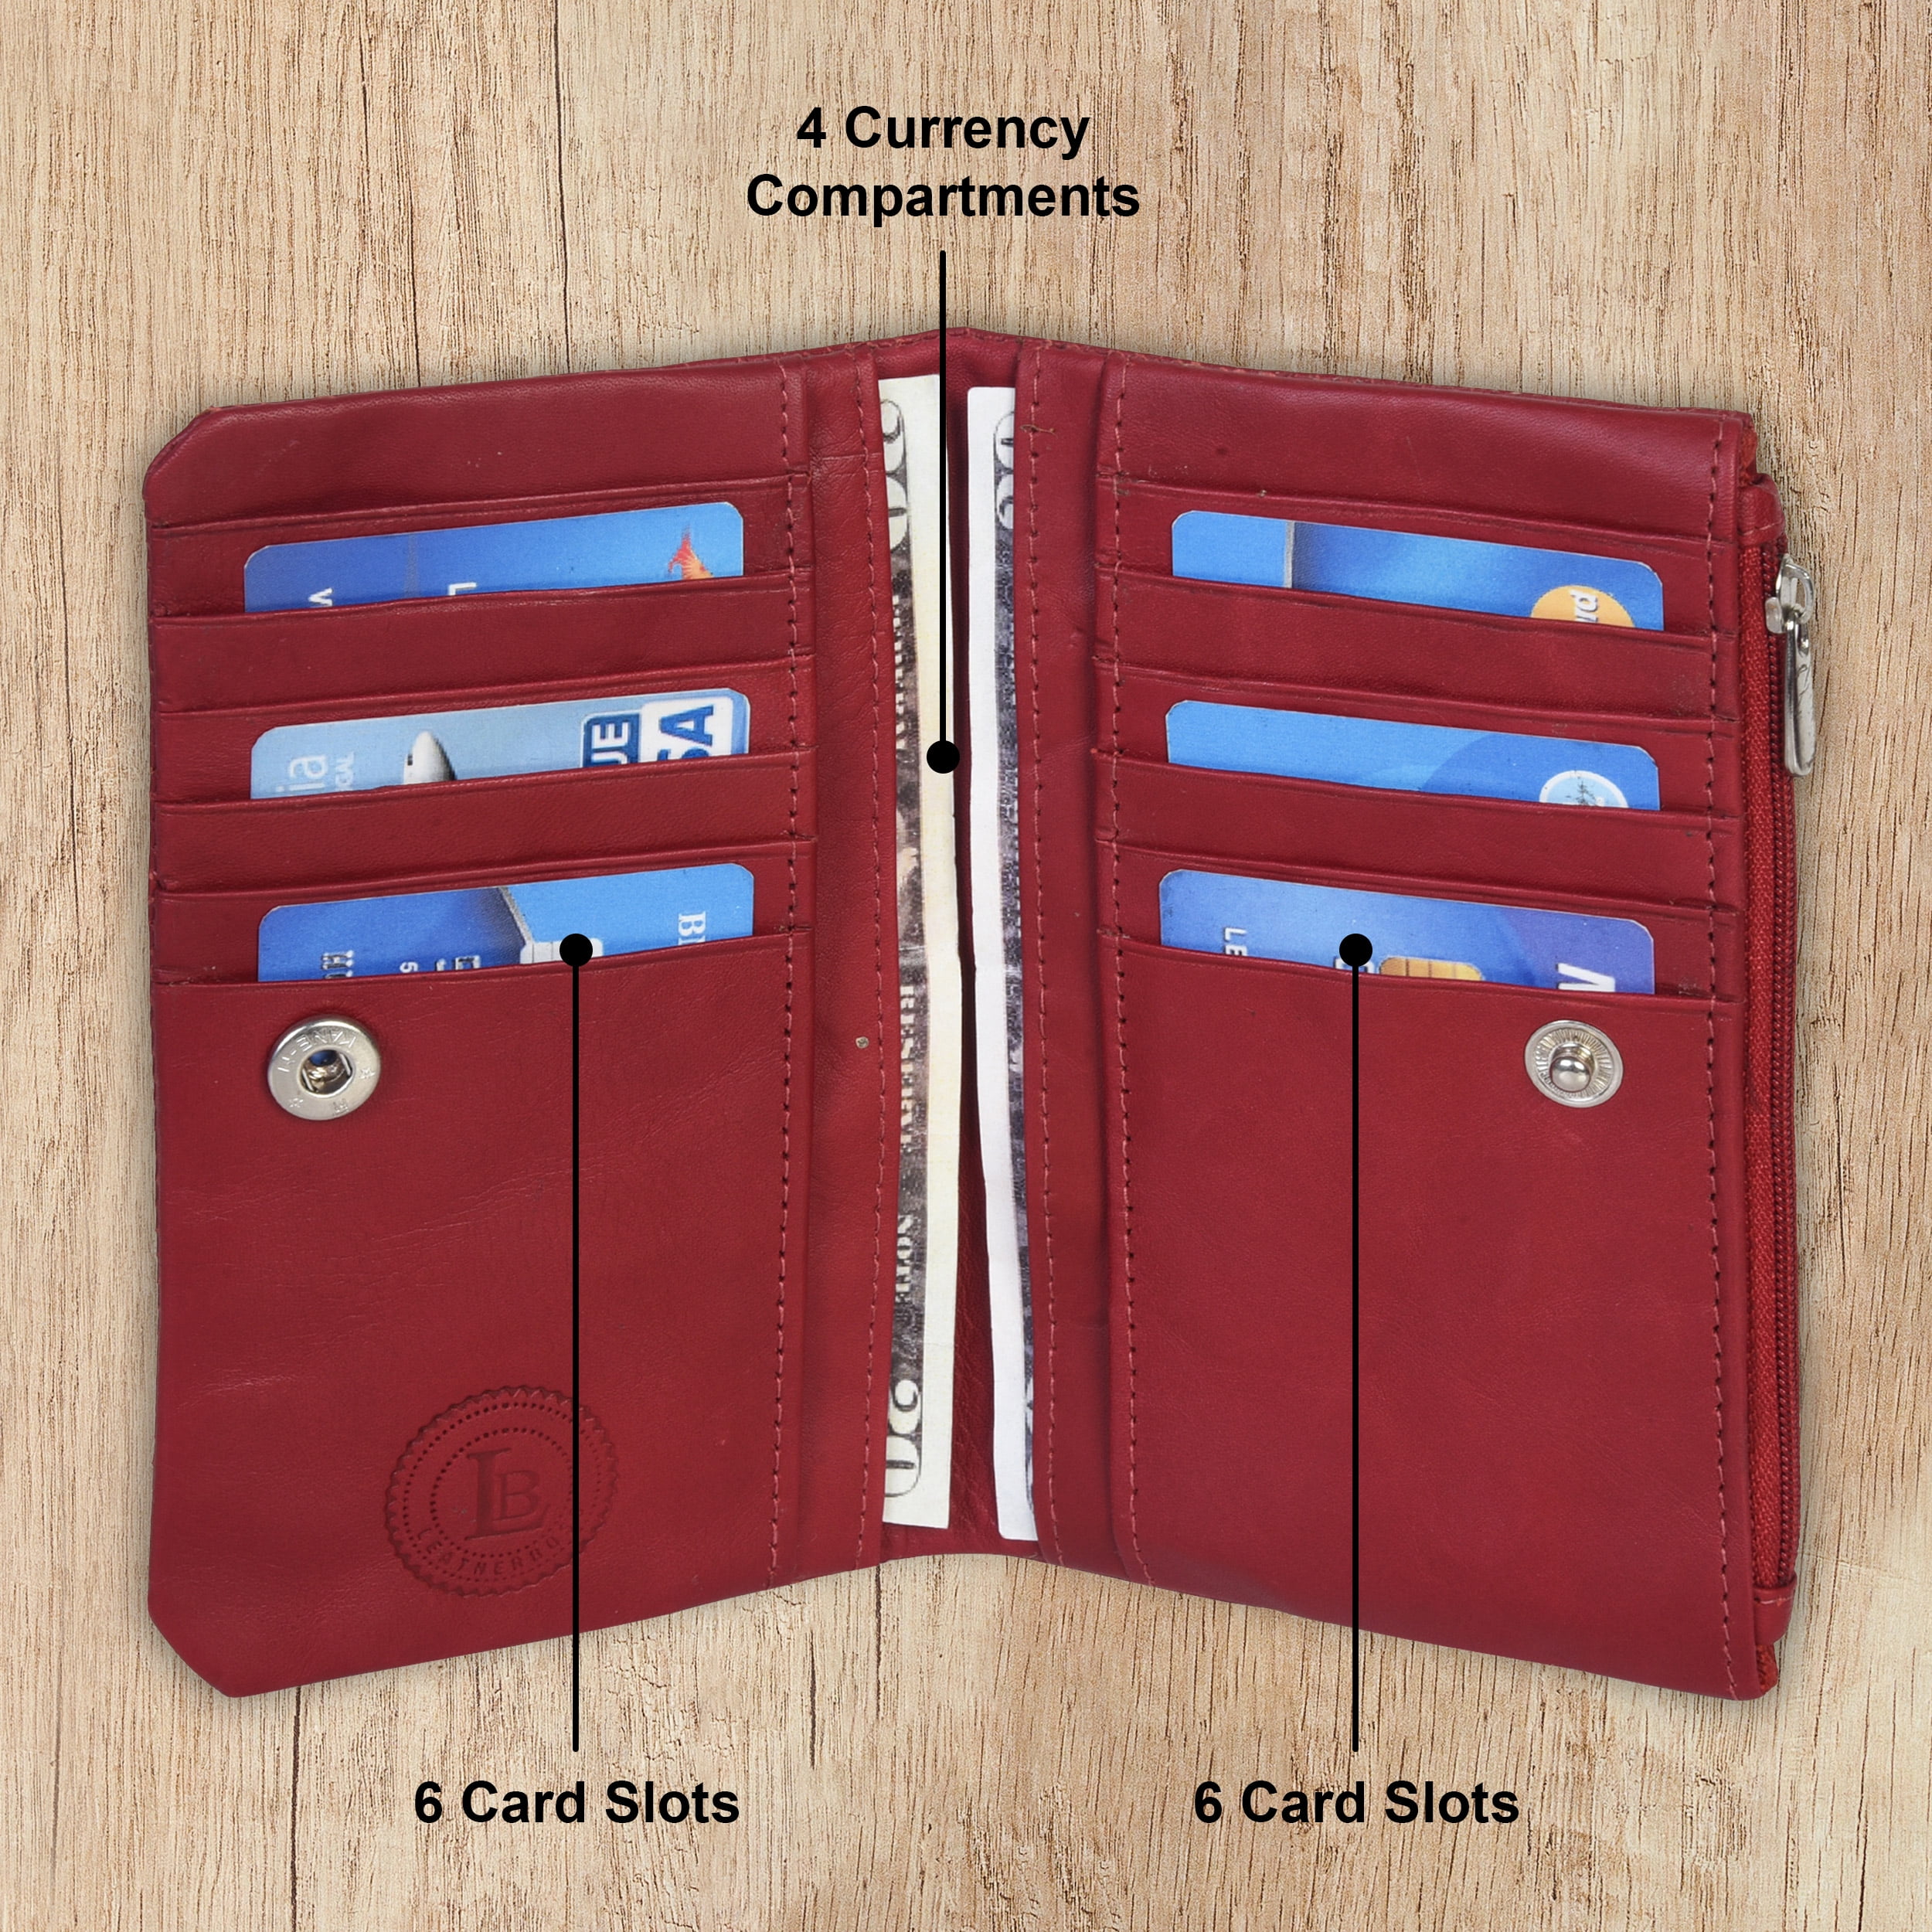 Soofotoo Compact RFID Blocking Credit Card Holder ID Card Wallets Holder Zipper Card Wallet Brown